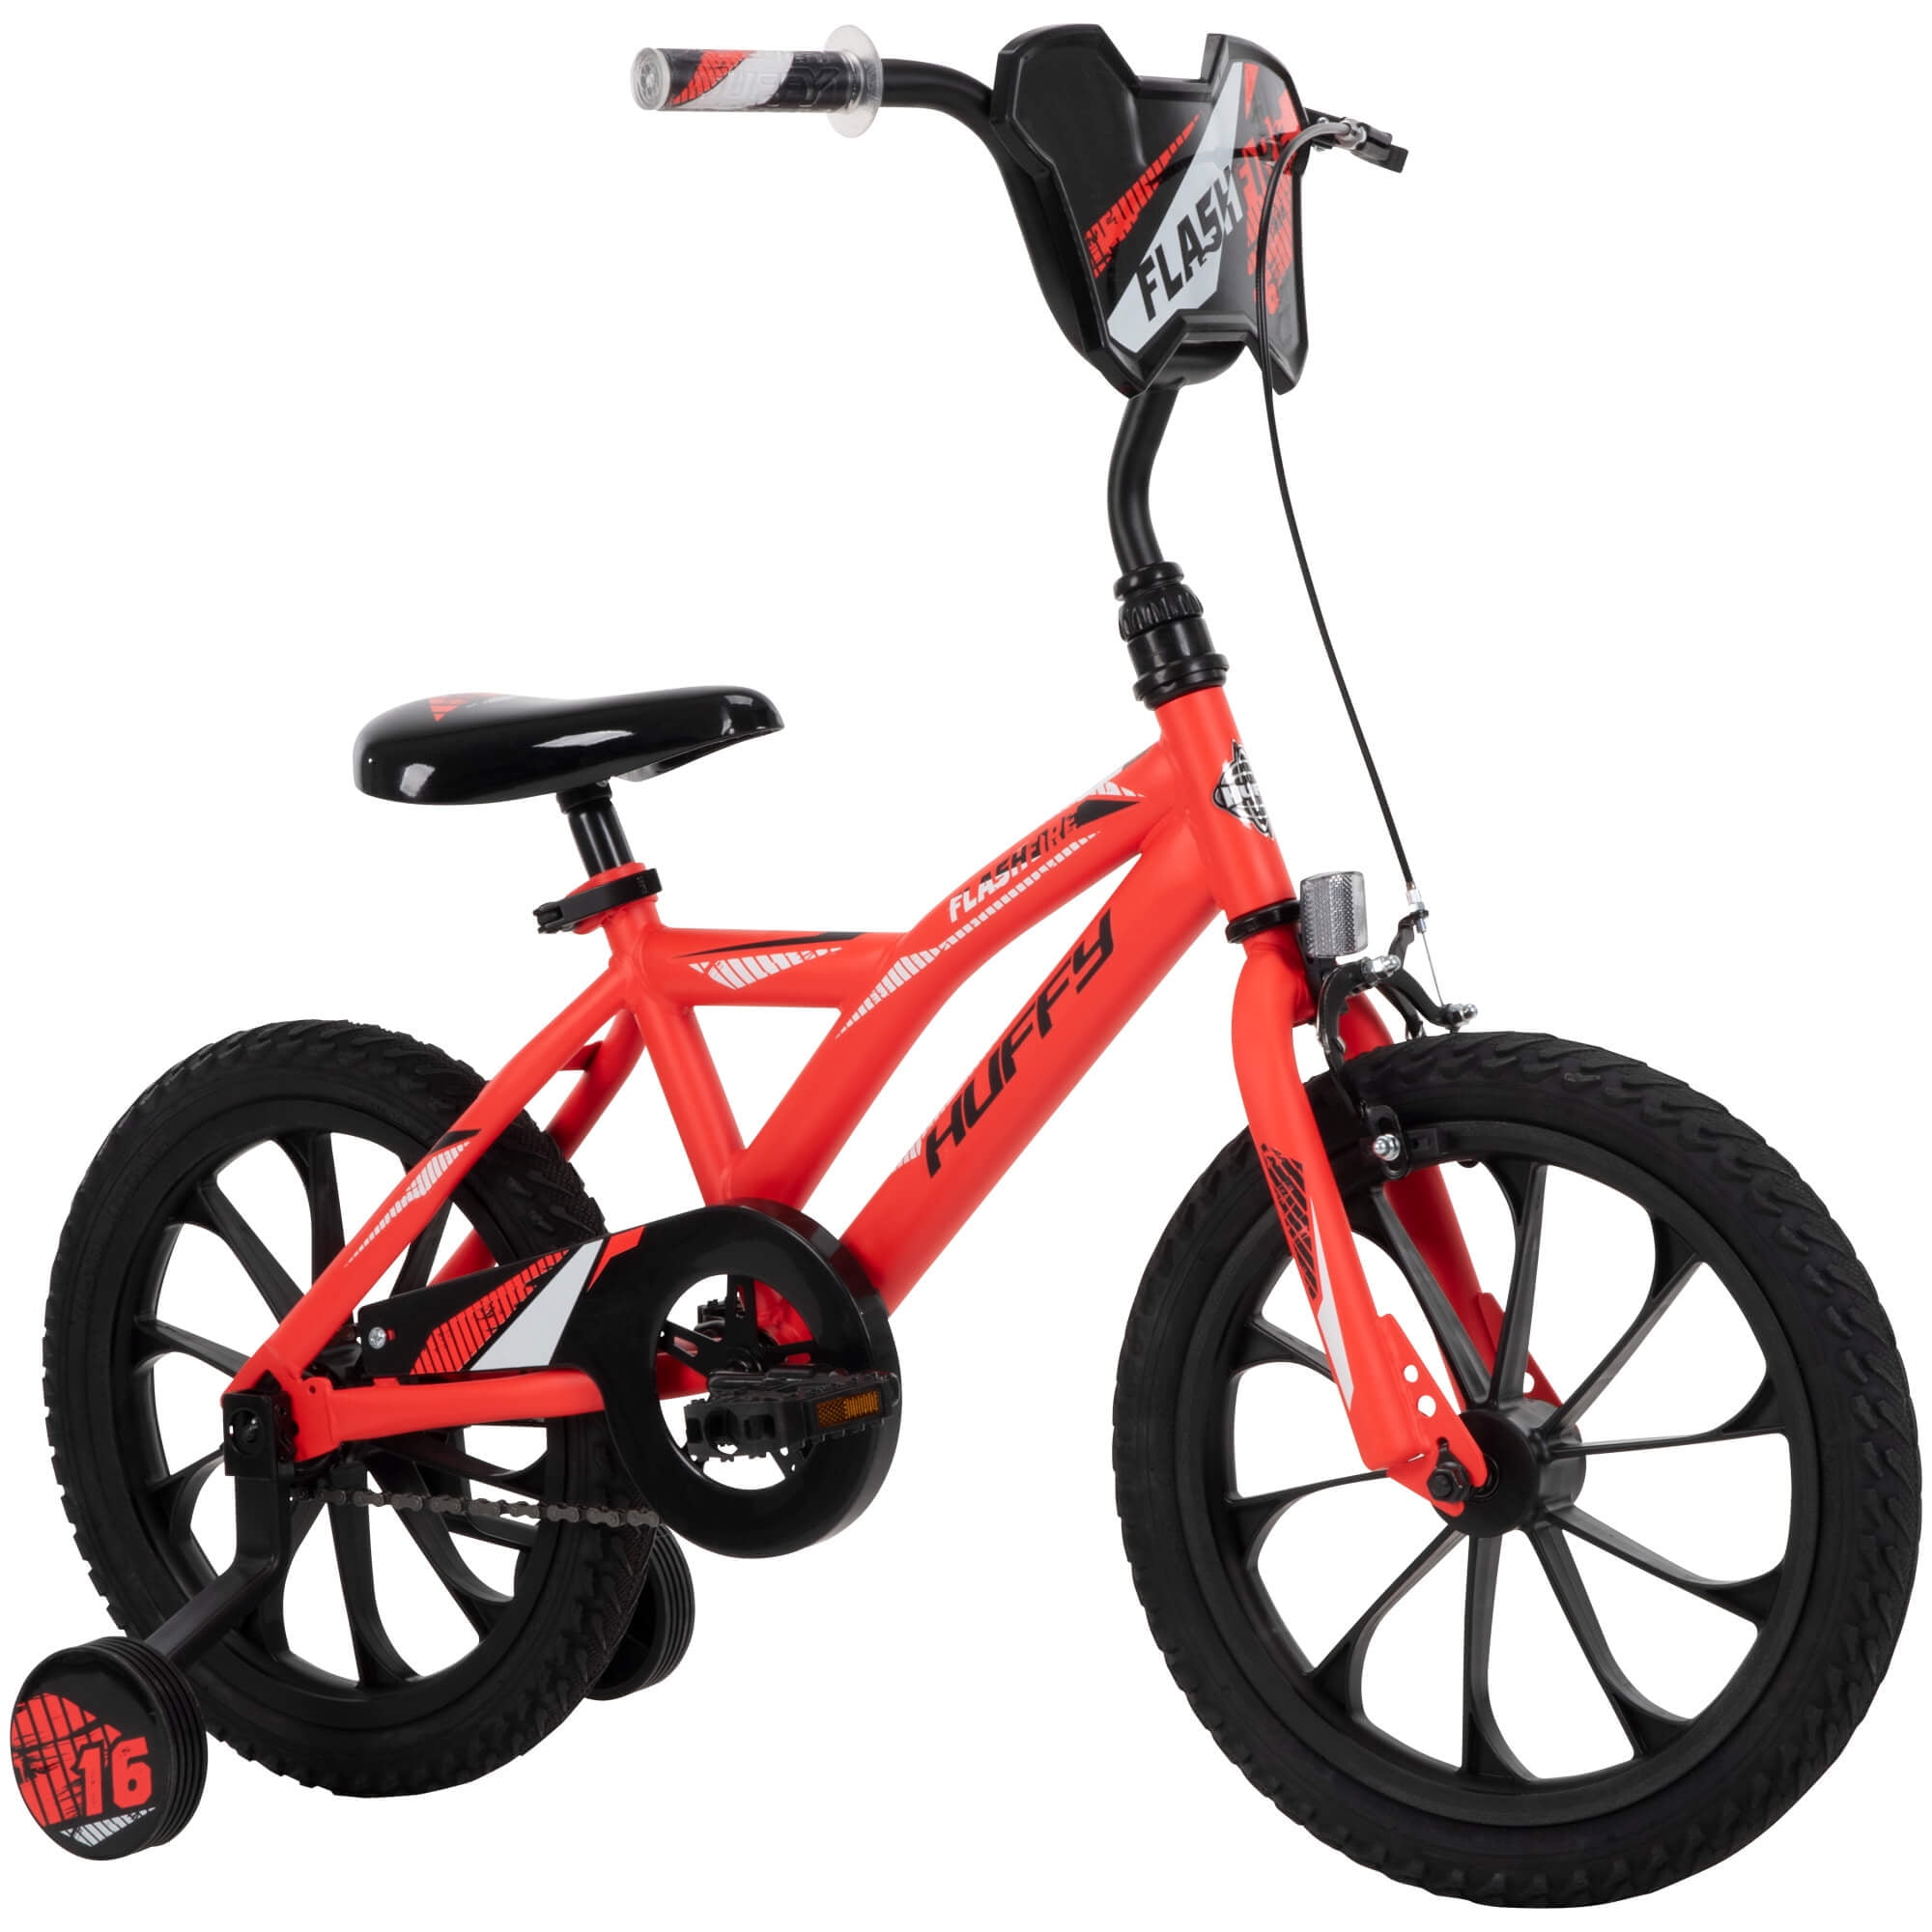 GIRL/BOY KIDS CHILDREN BIKE BICYCLE 16' INCH MAXBIKE RED 